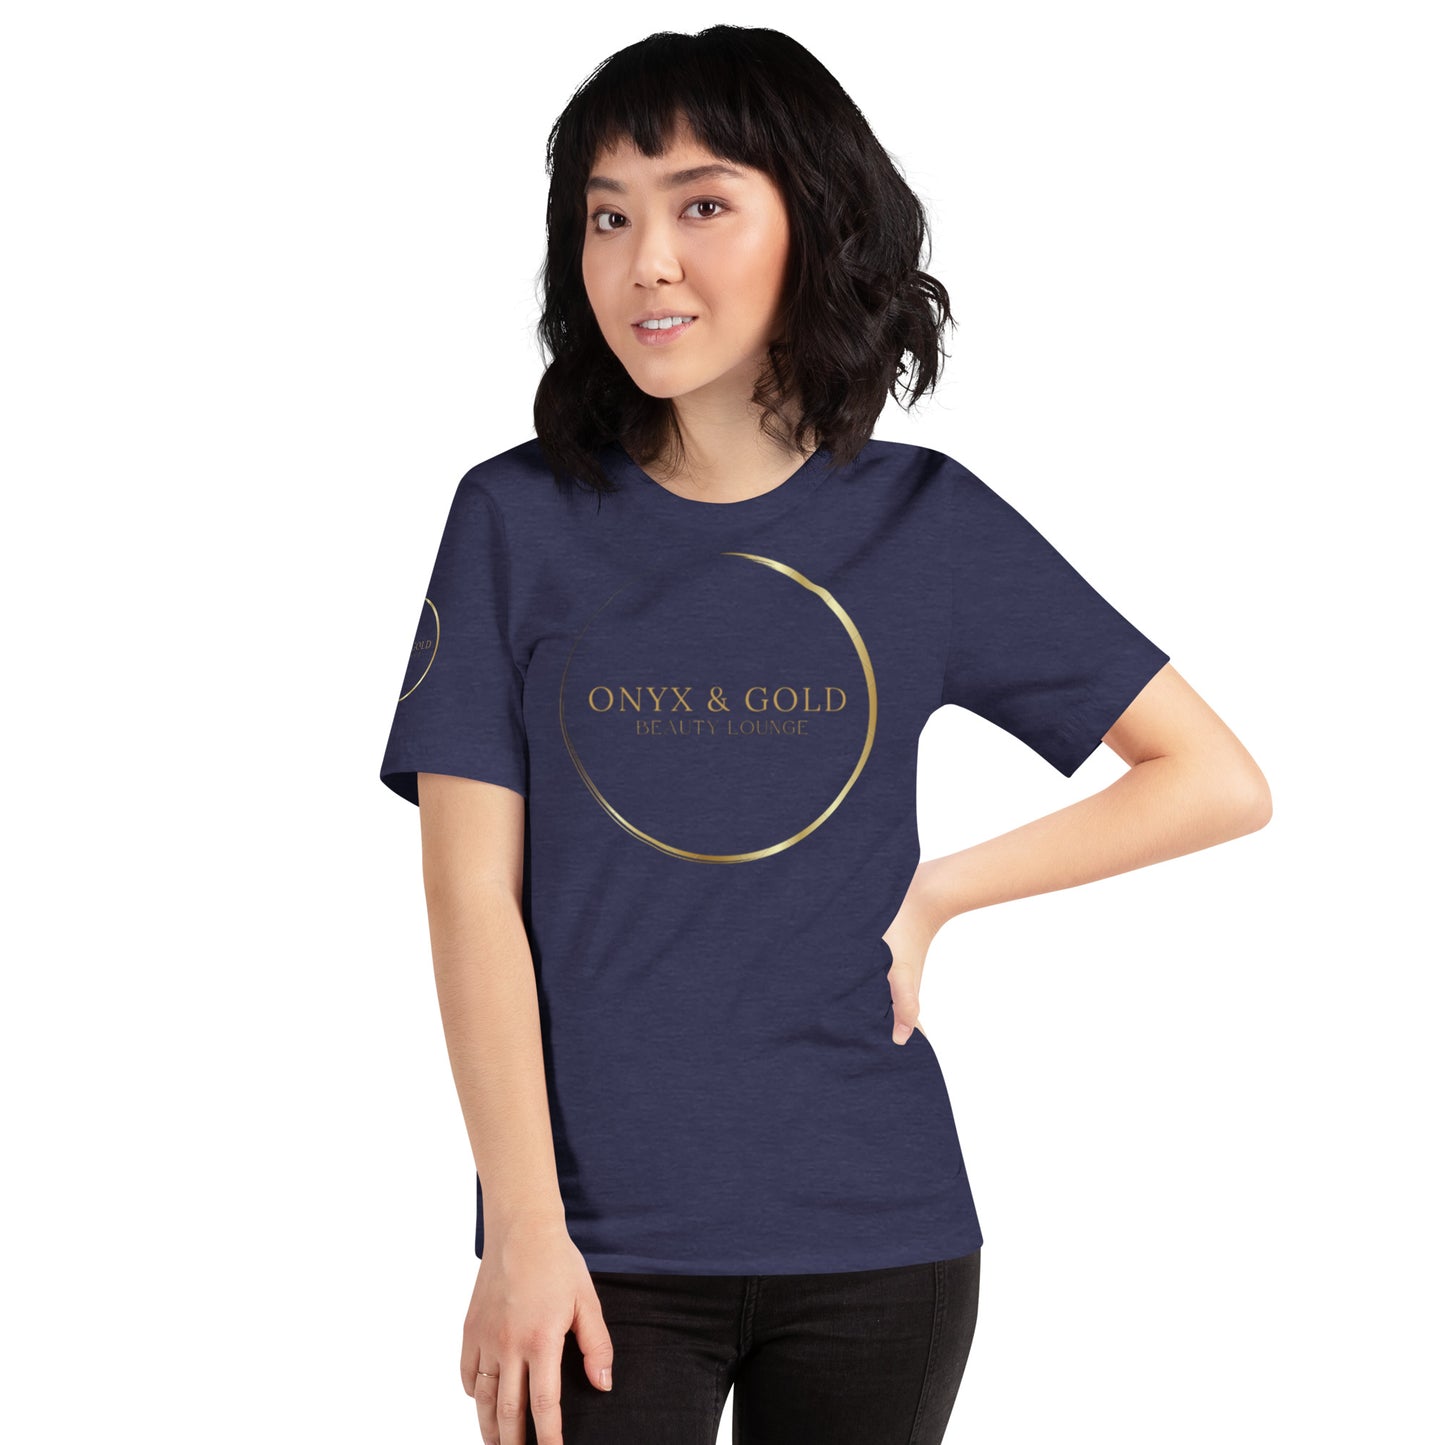 Onyx & Gold Unisex t-shirt - Gold Logo - Bella + Canvas 3001 - Right Sleeve Logo